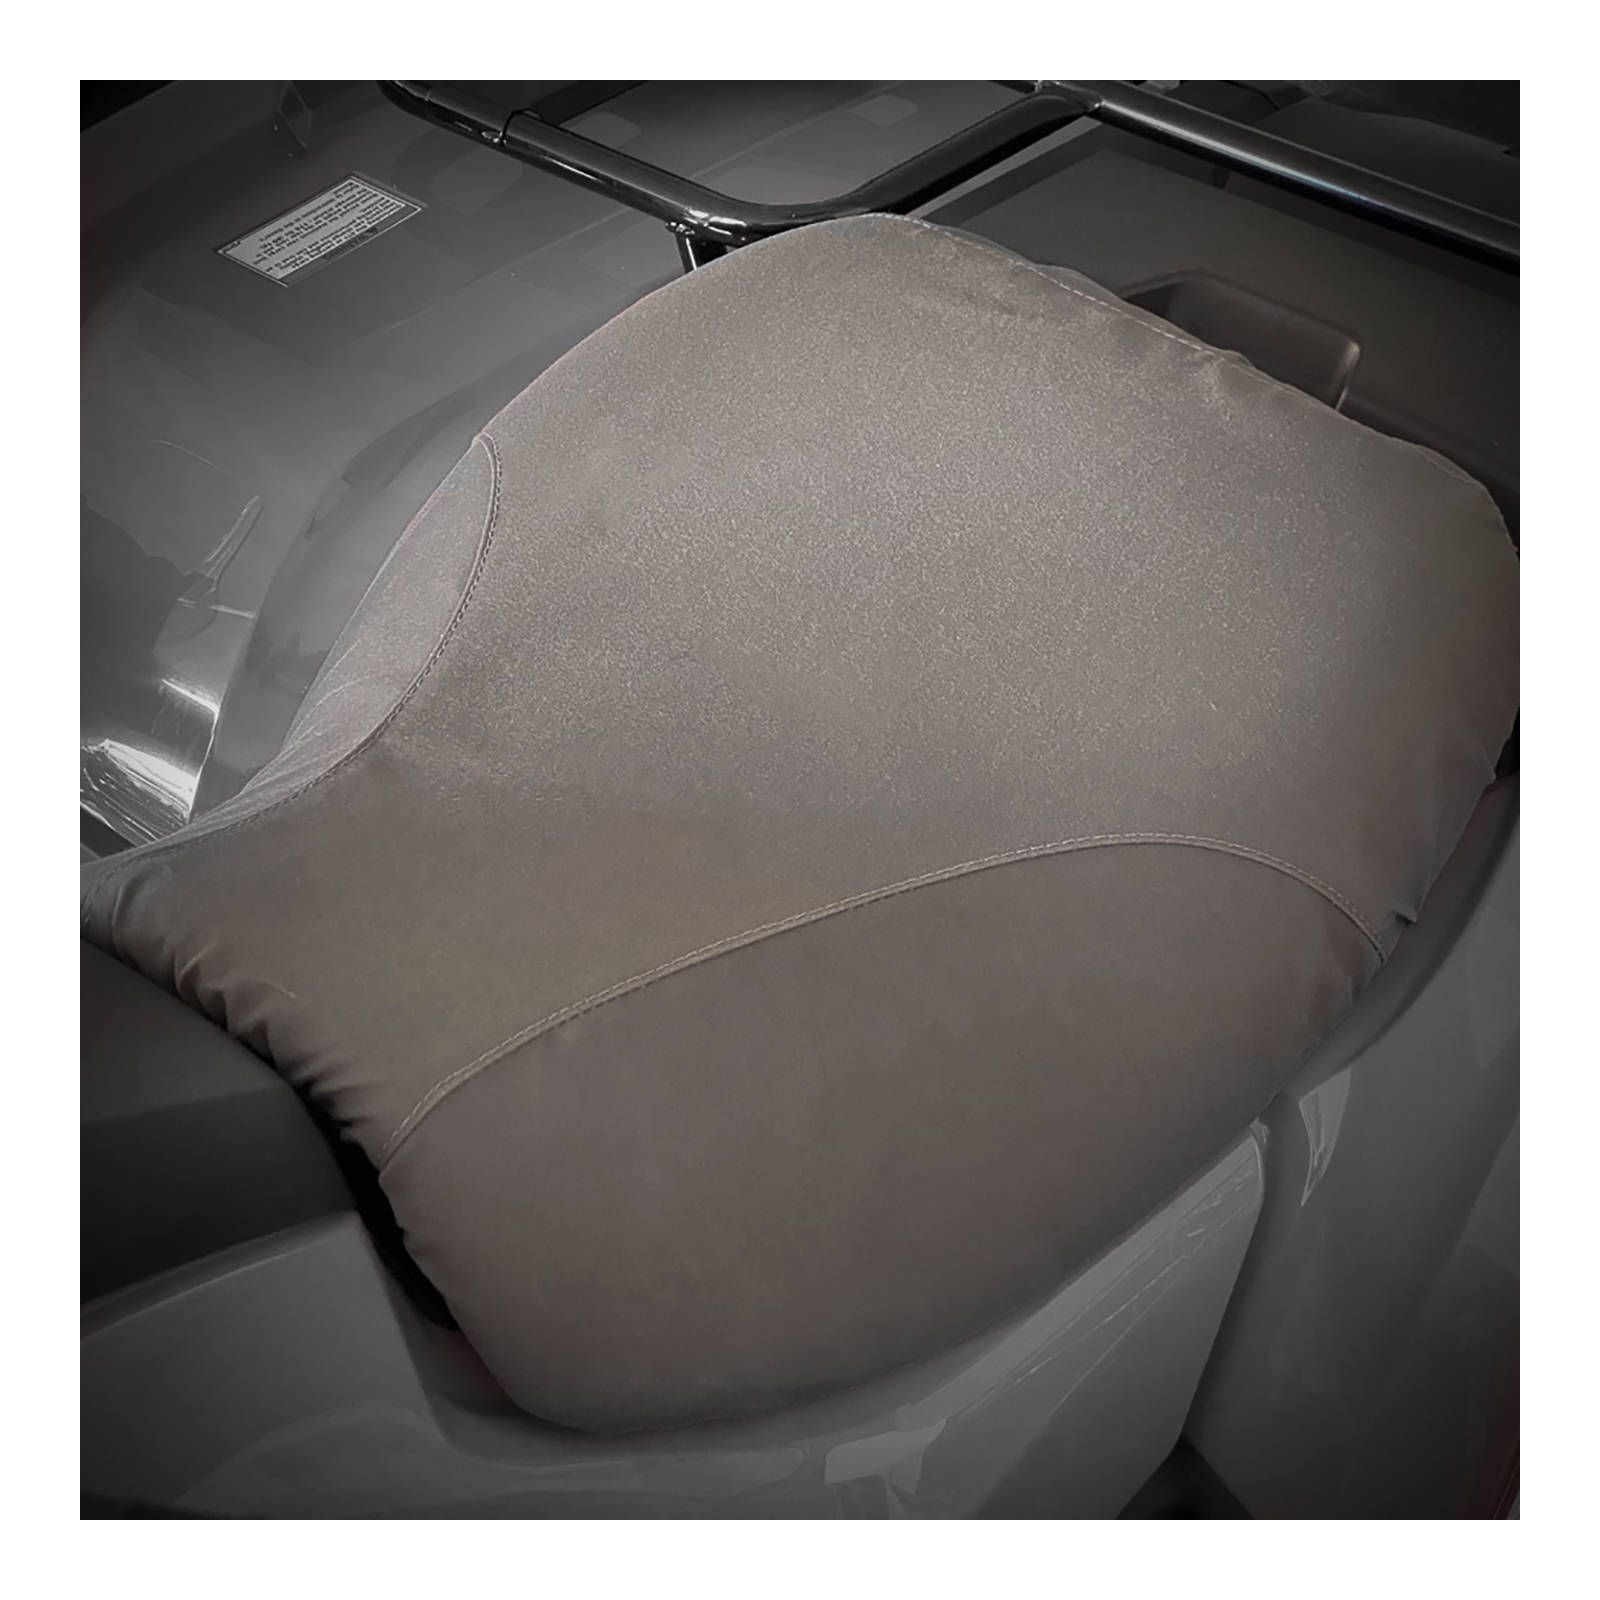 New WHITES Canvas Seat Cover For Honda Trx520Fm 20 #WPSCH0630C